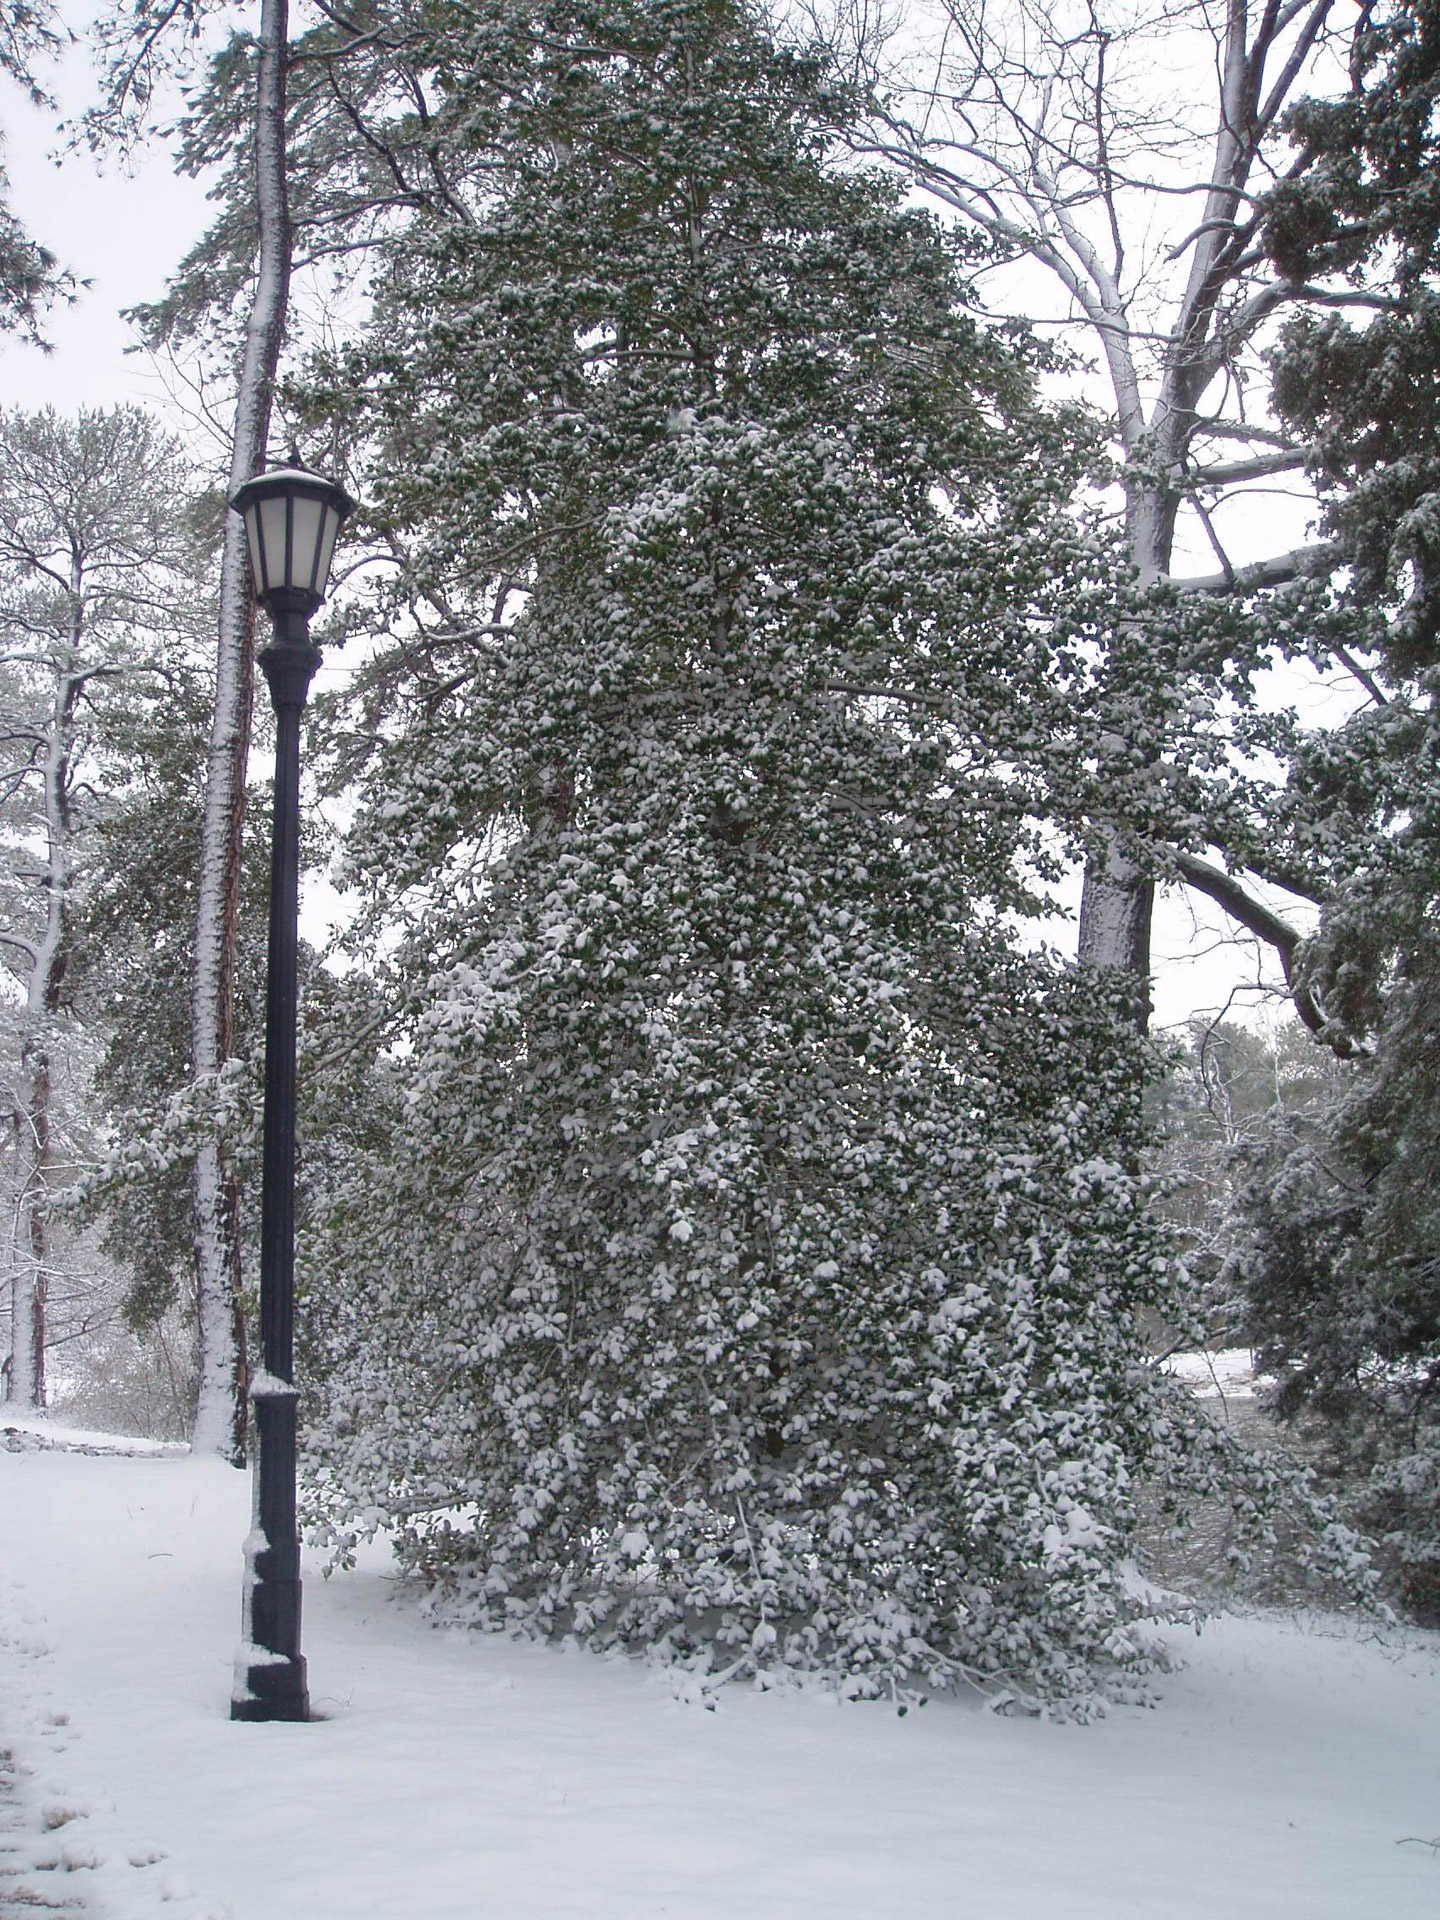 Snowy Tree & Light Pole